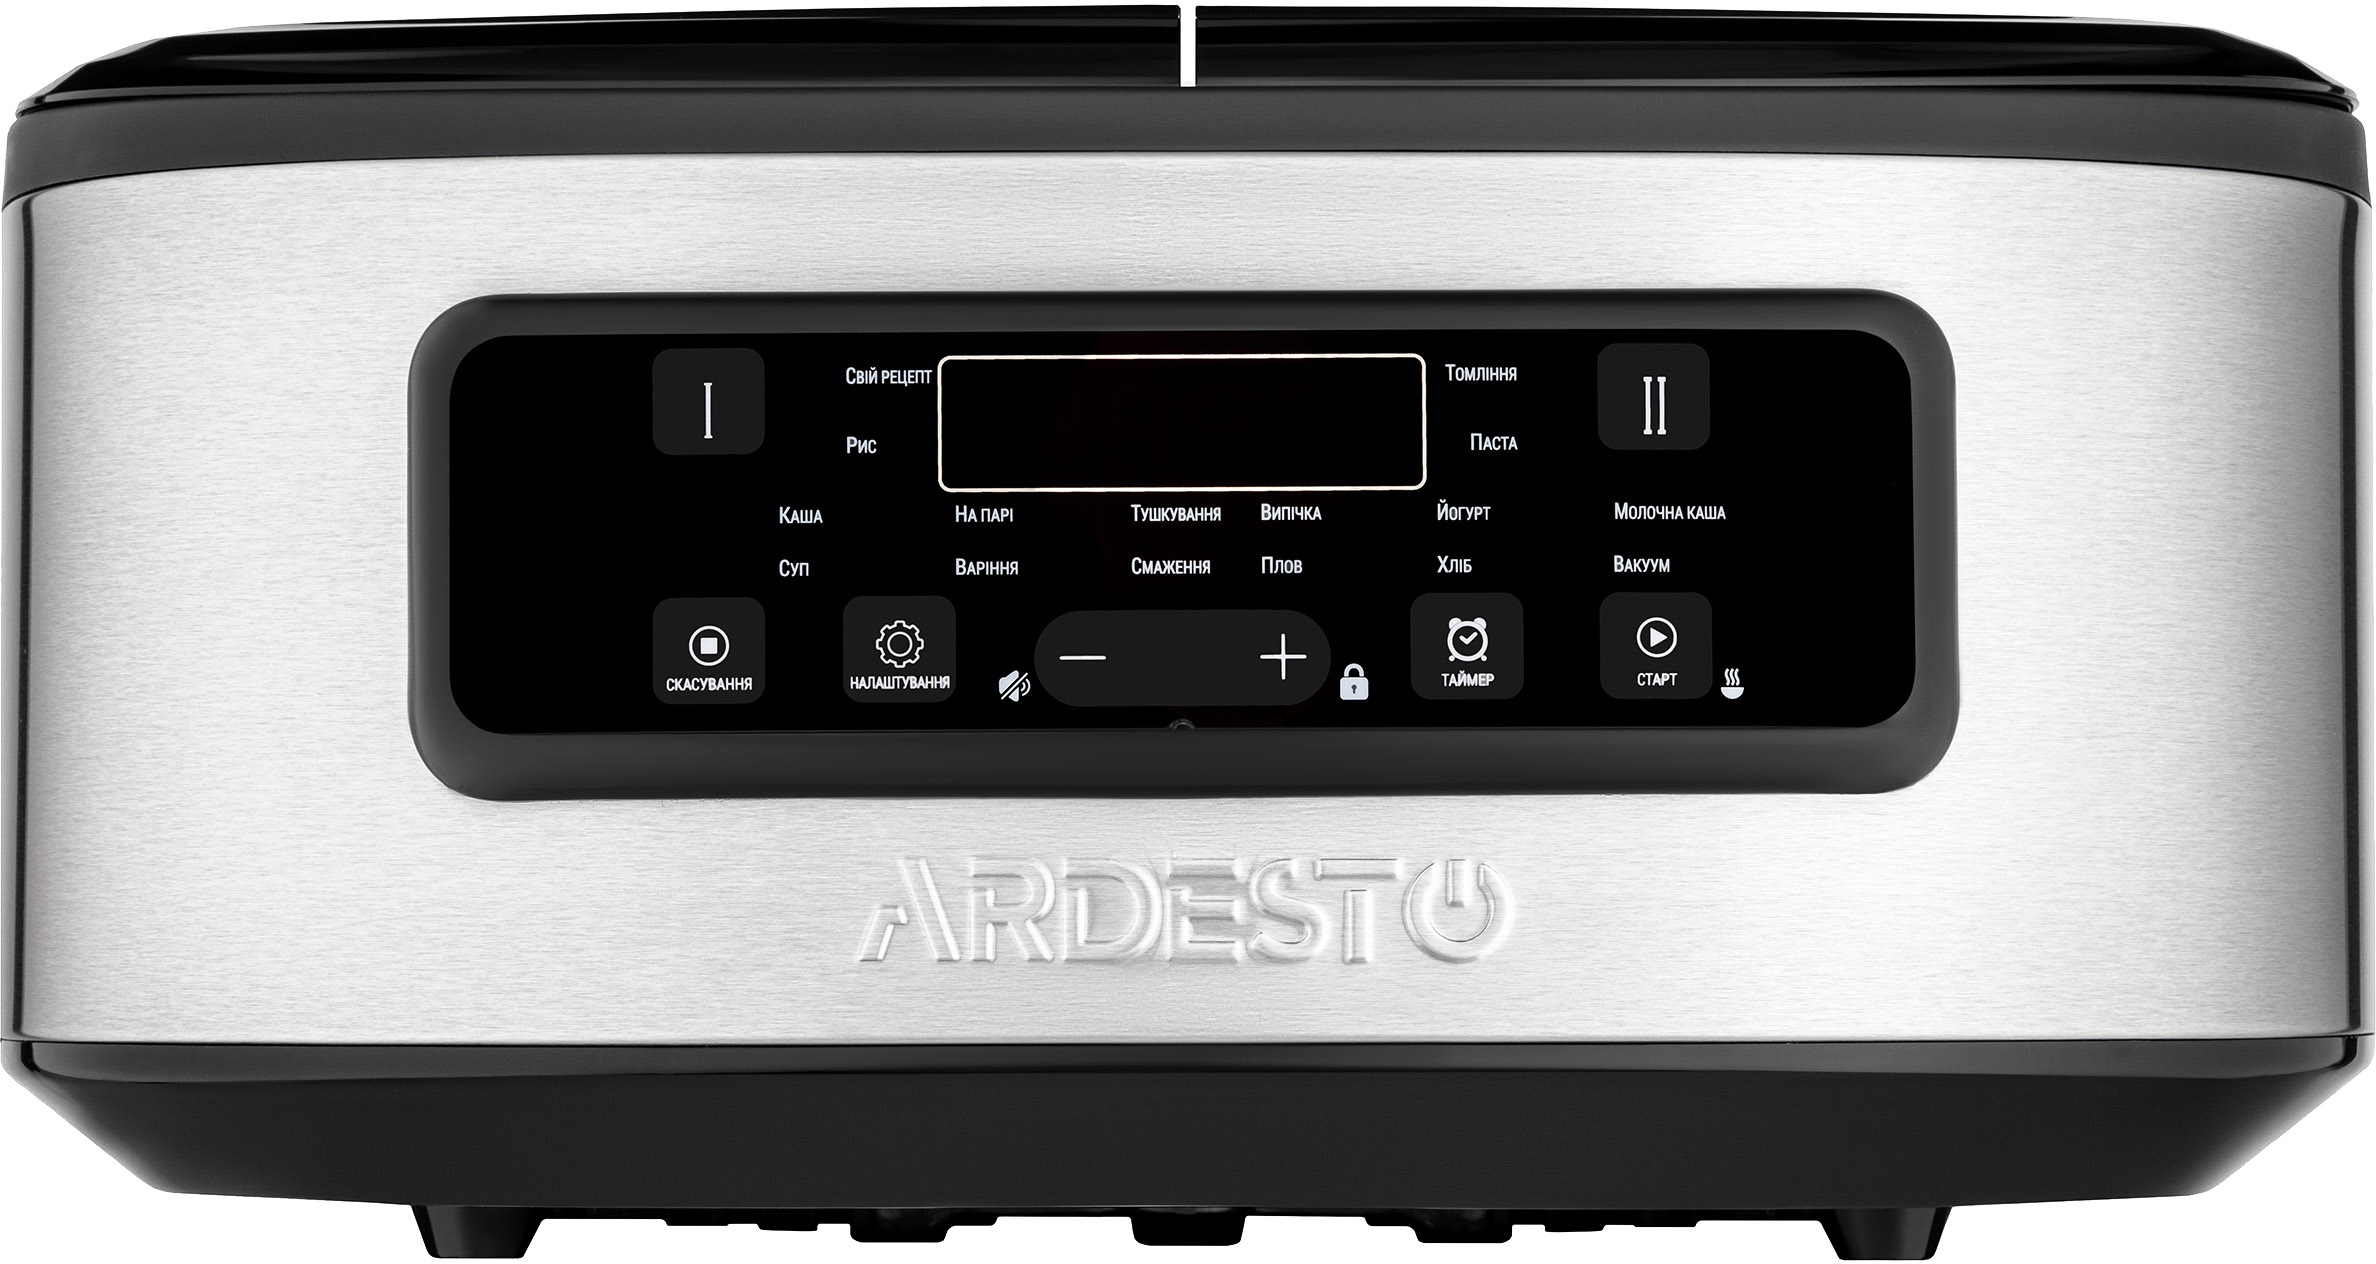 Мультиварка Ardesto DMC-SA1212SB цена 3699.00 грн - фотография 2